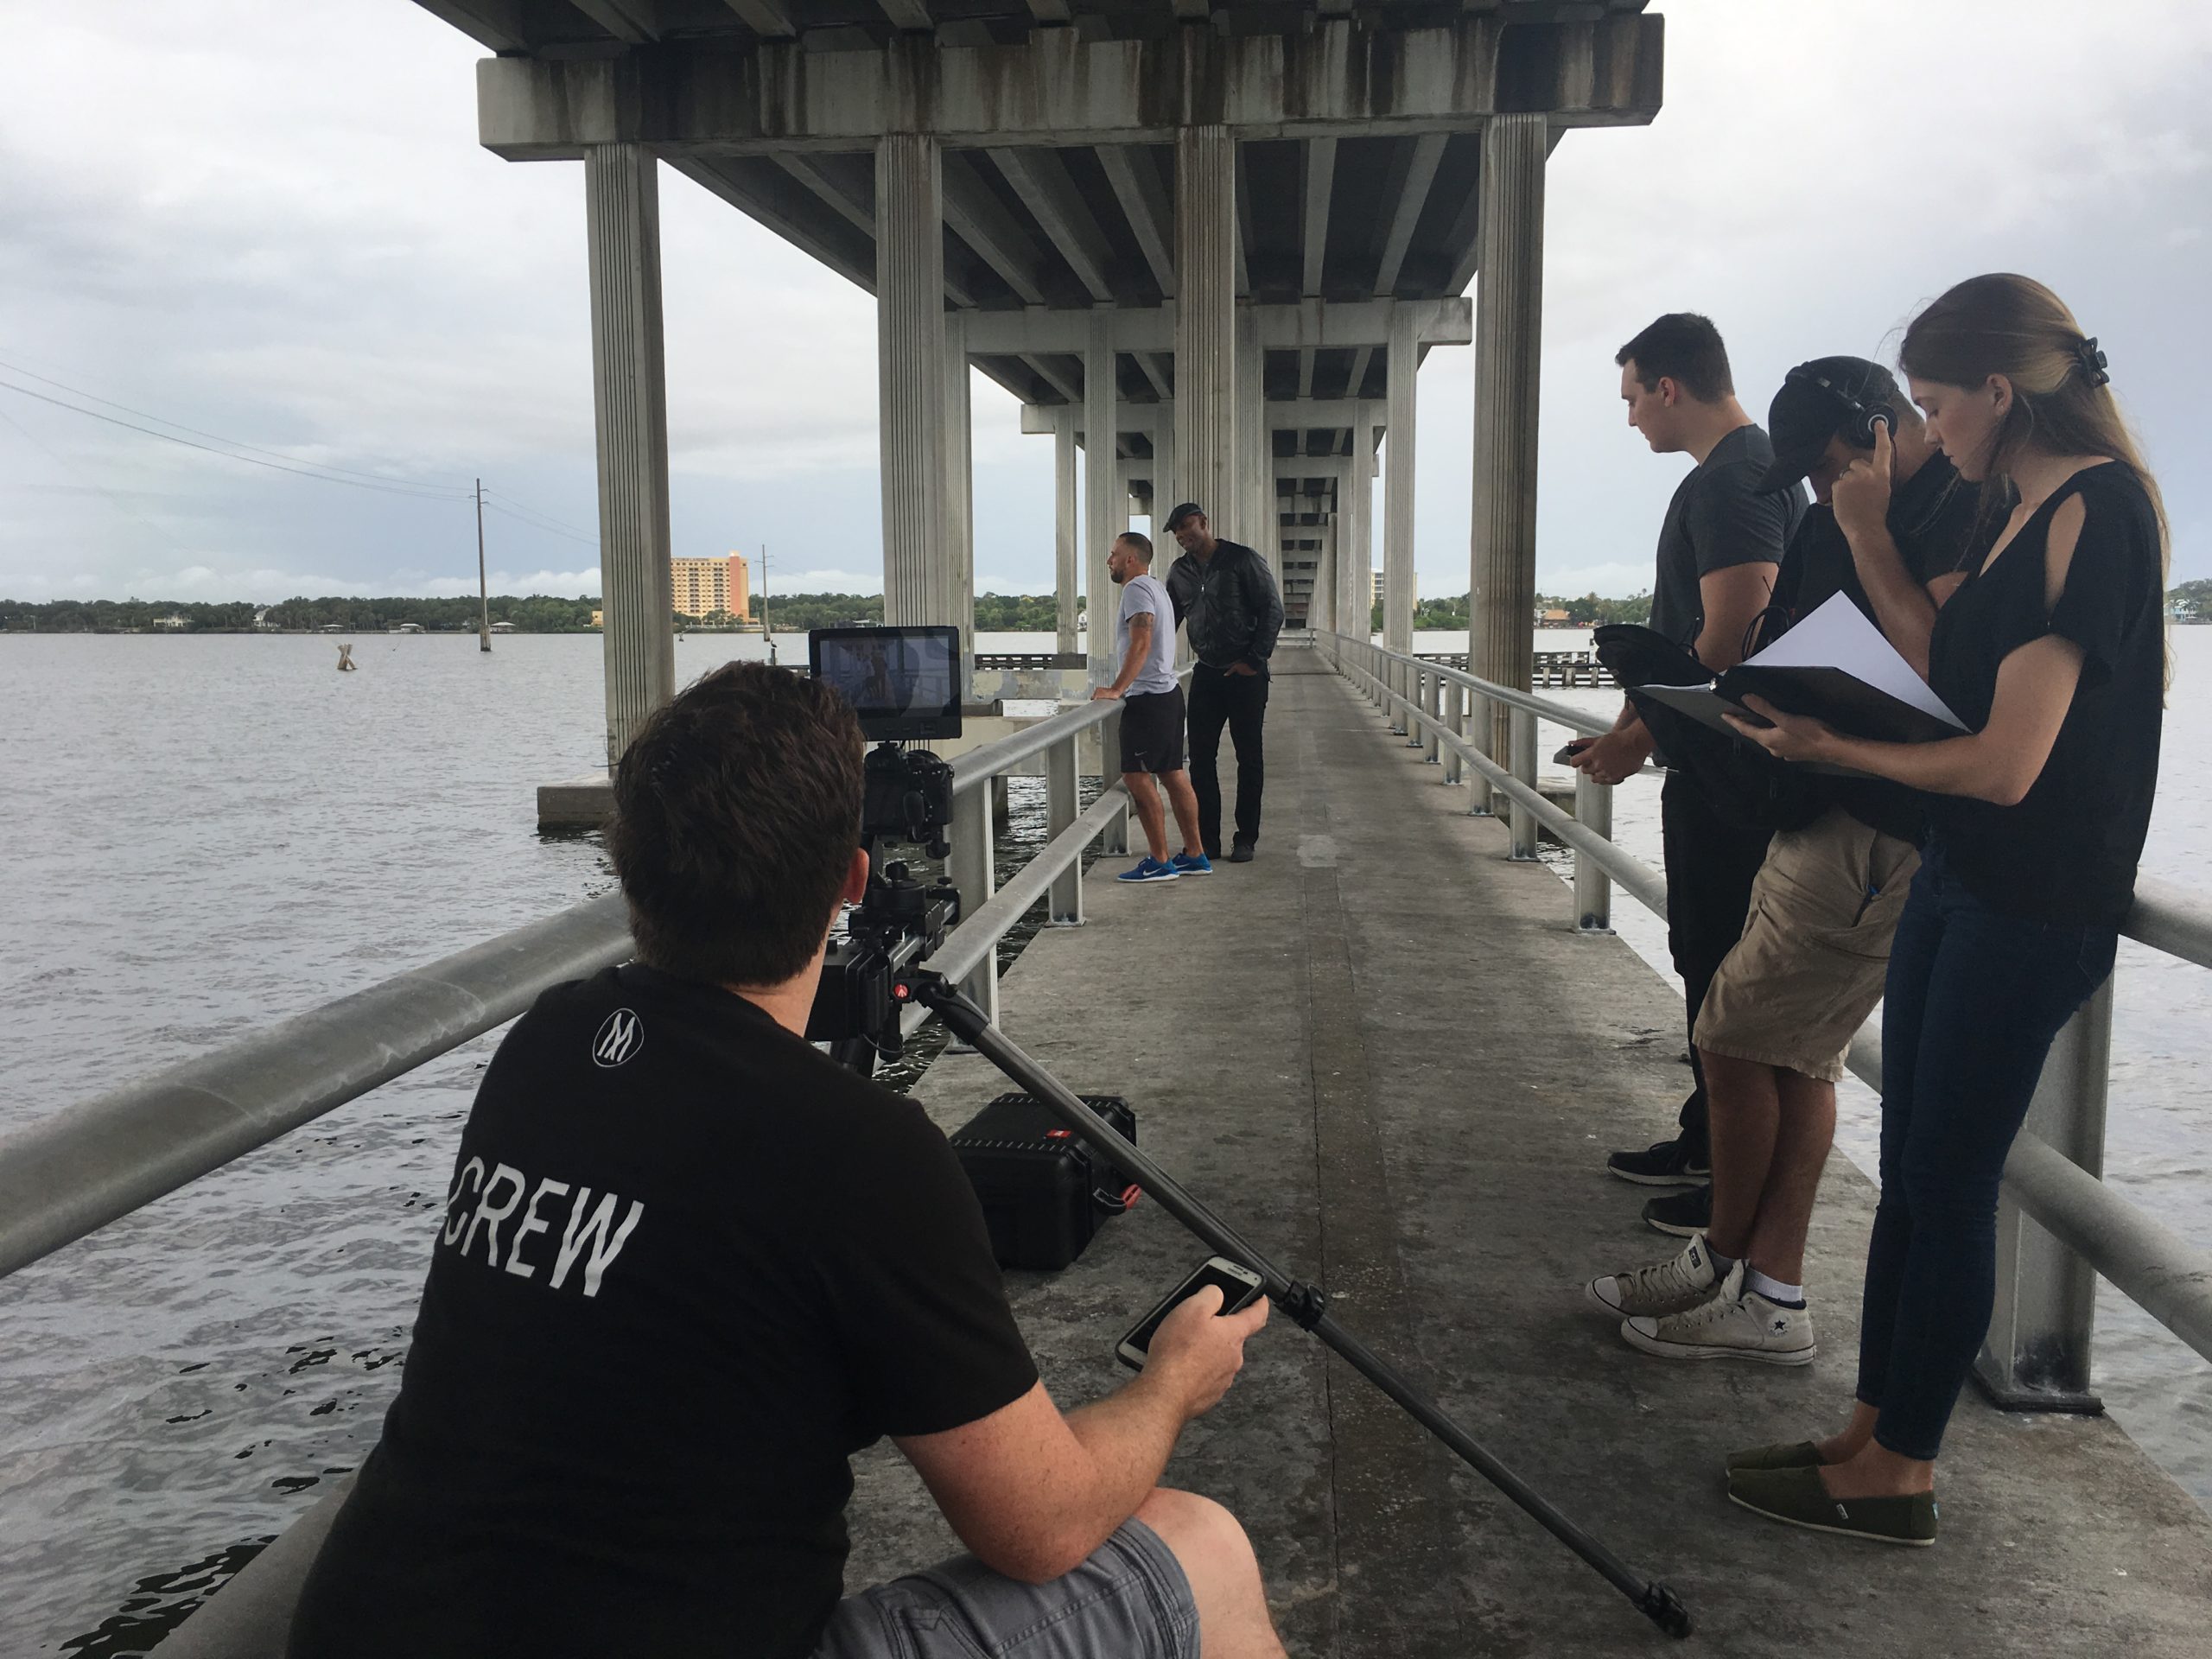 Production crew shooting a video on a pier under a bridge 